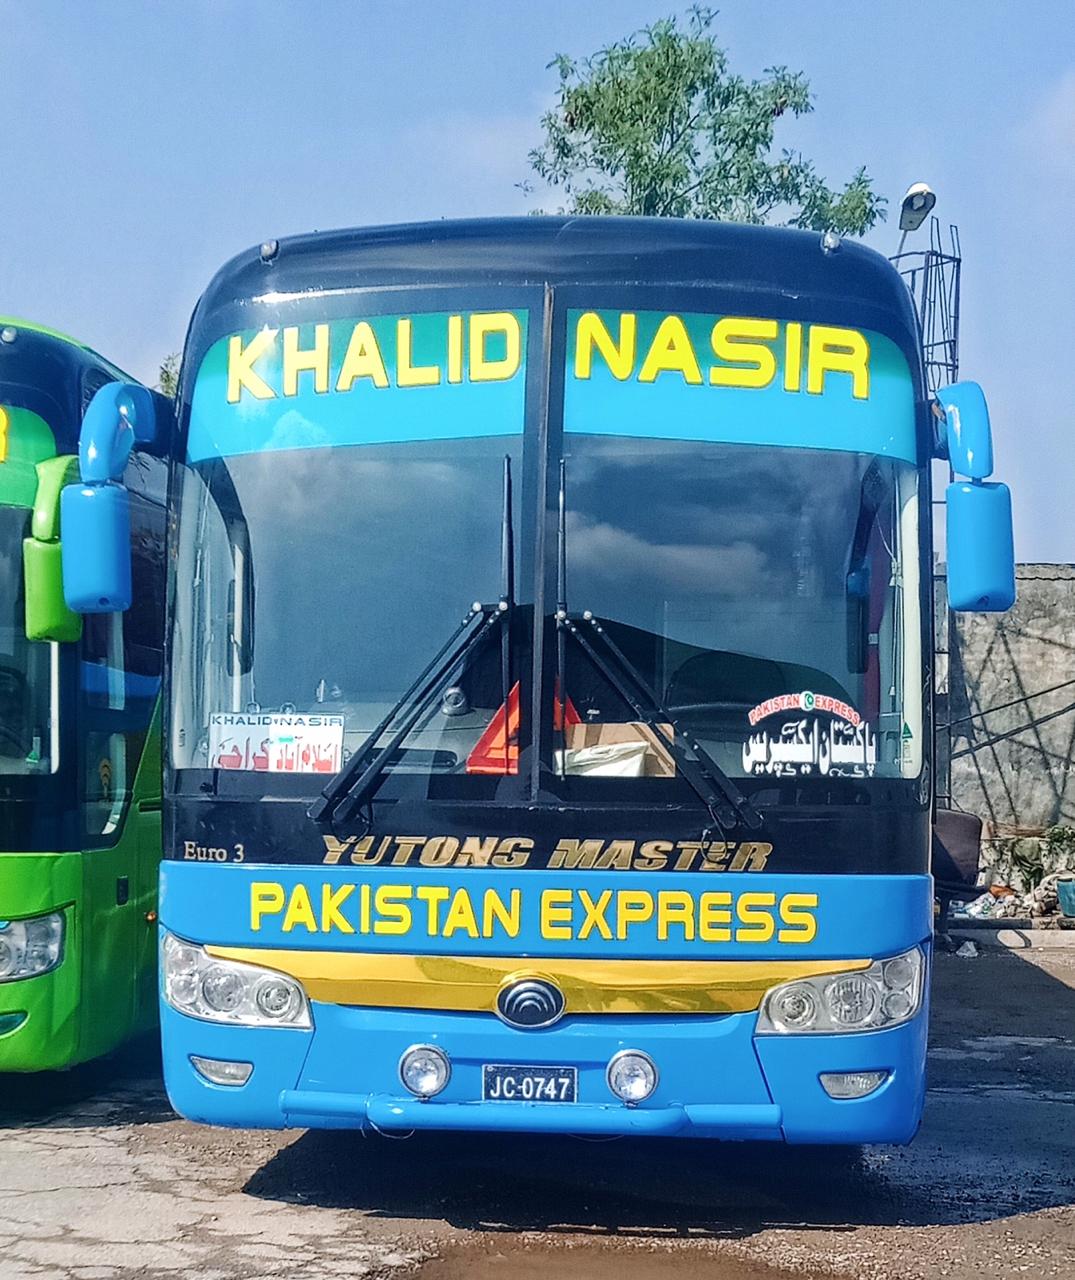 Pakistan Express Khalid Nasir Branch Karachi